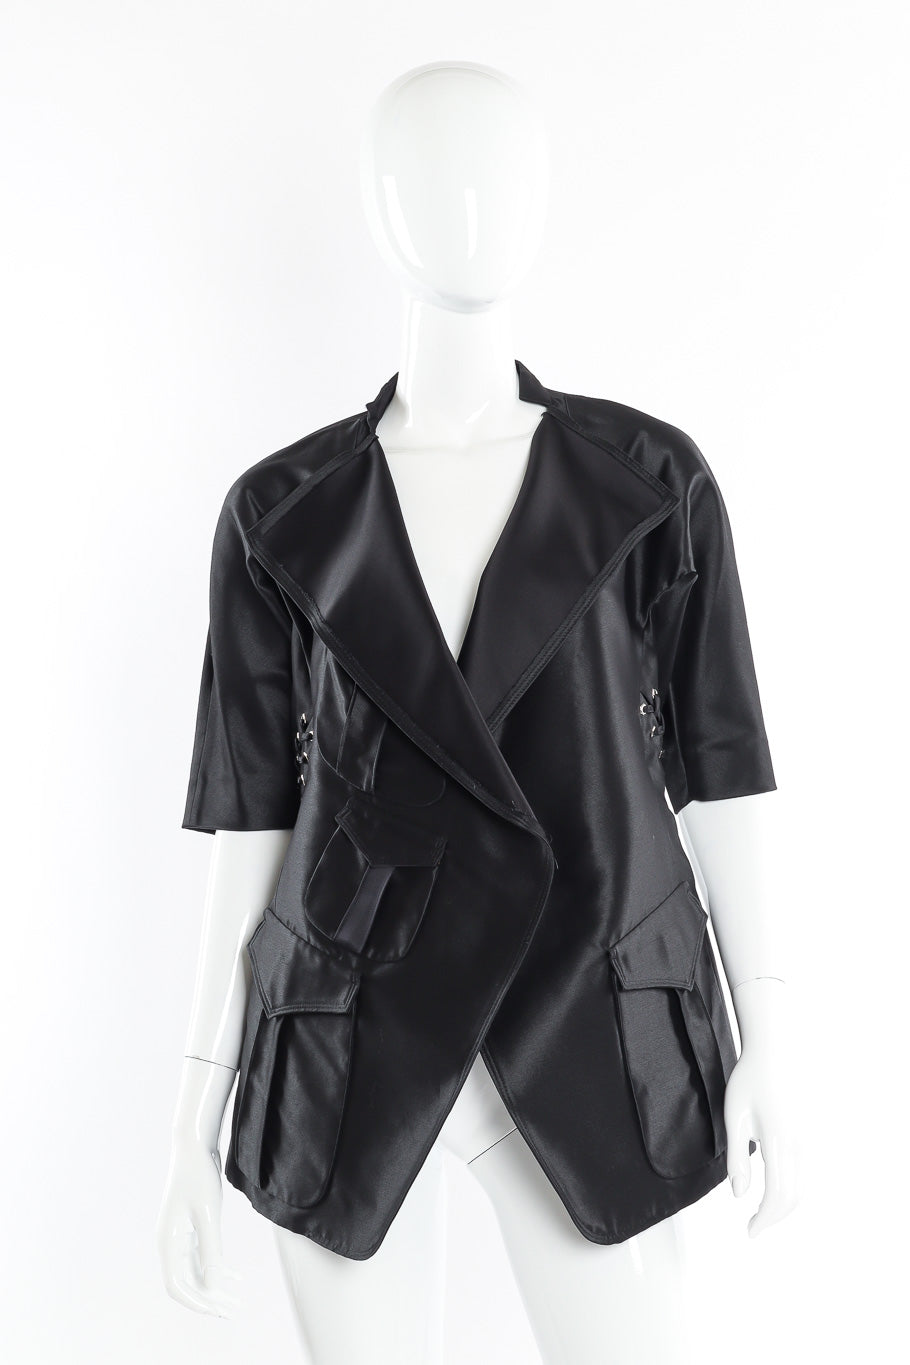 Grommet jacket by Yves Saint Laurent mannequin front @recessla